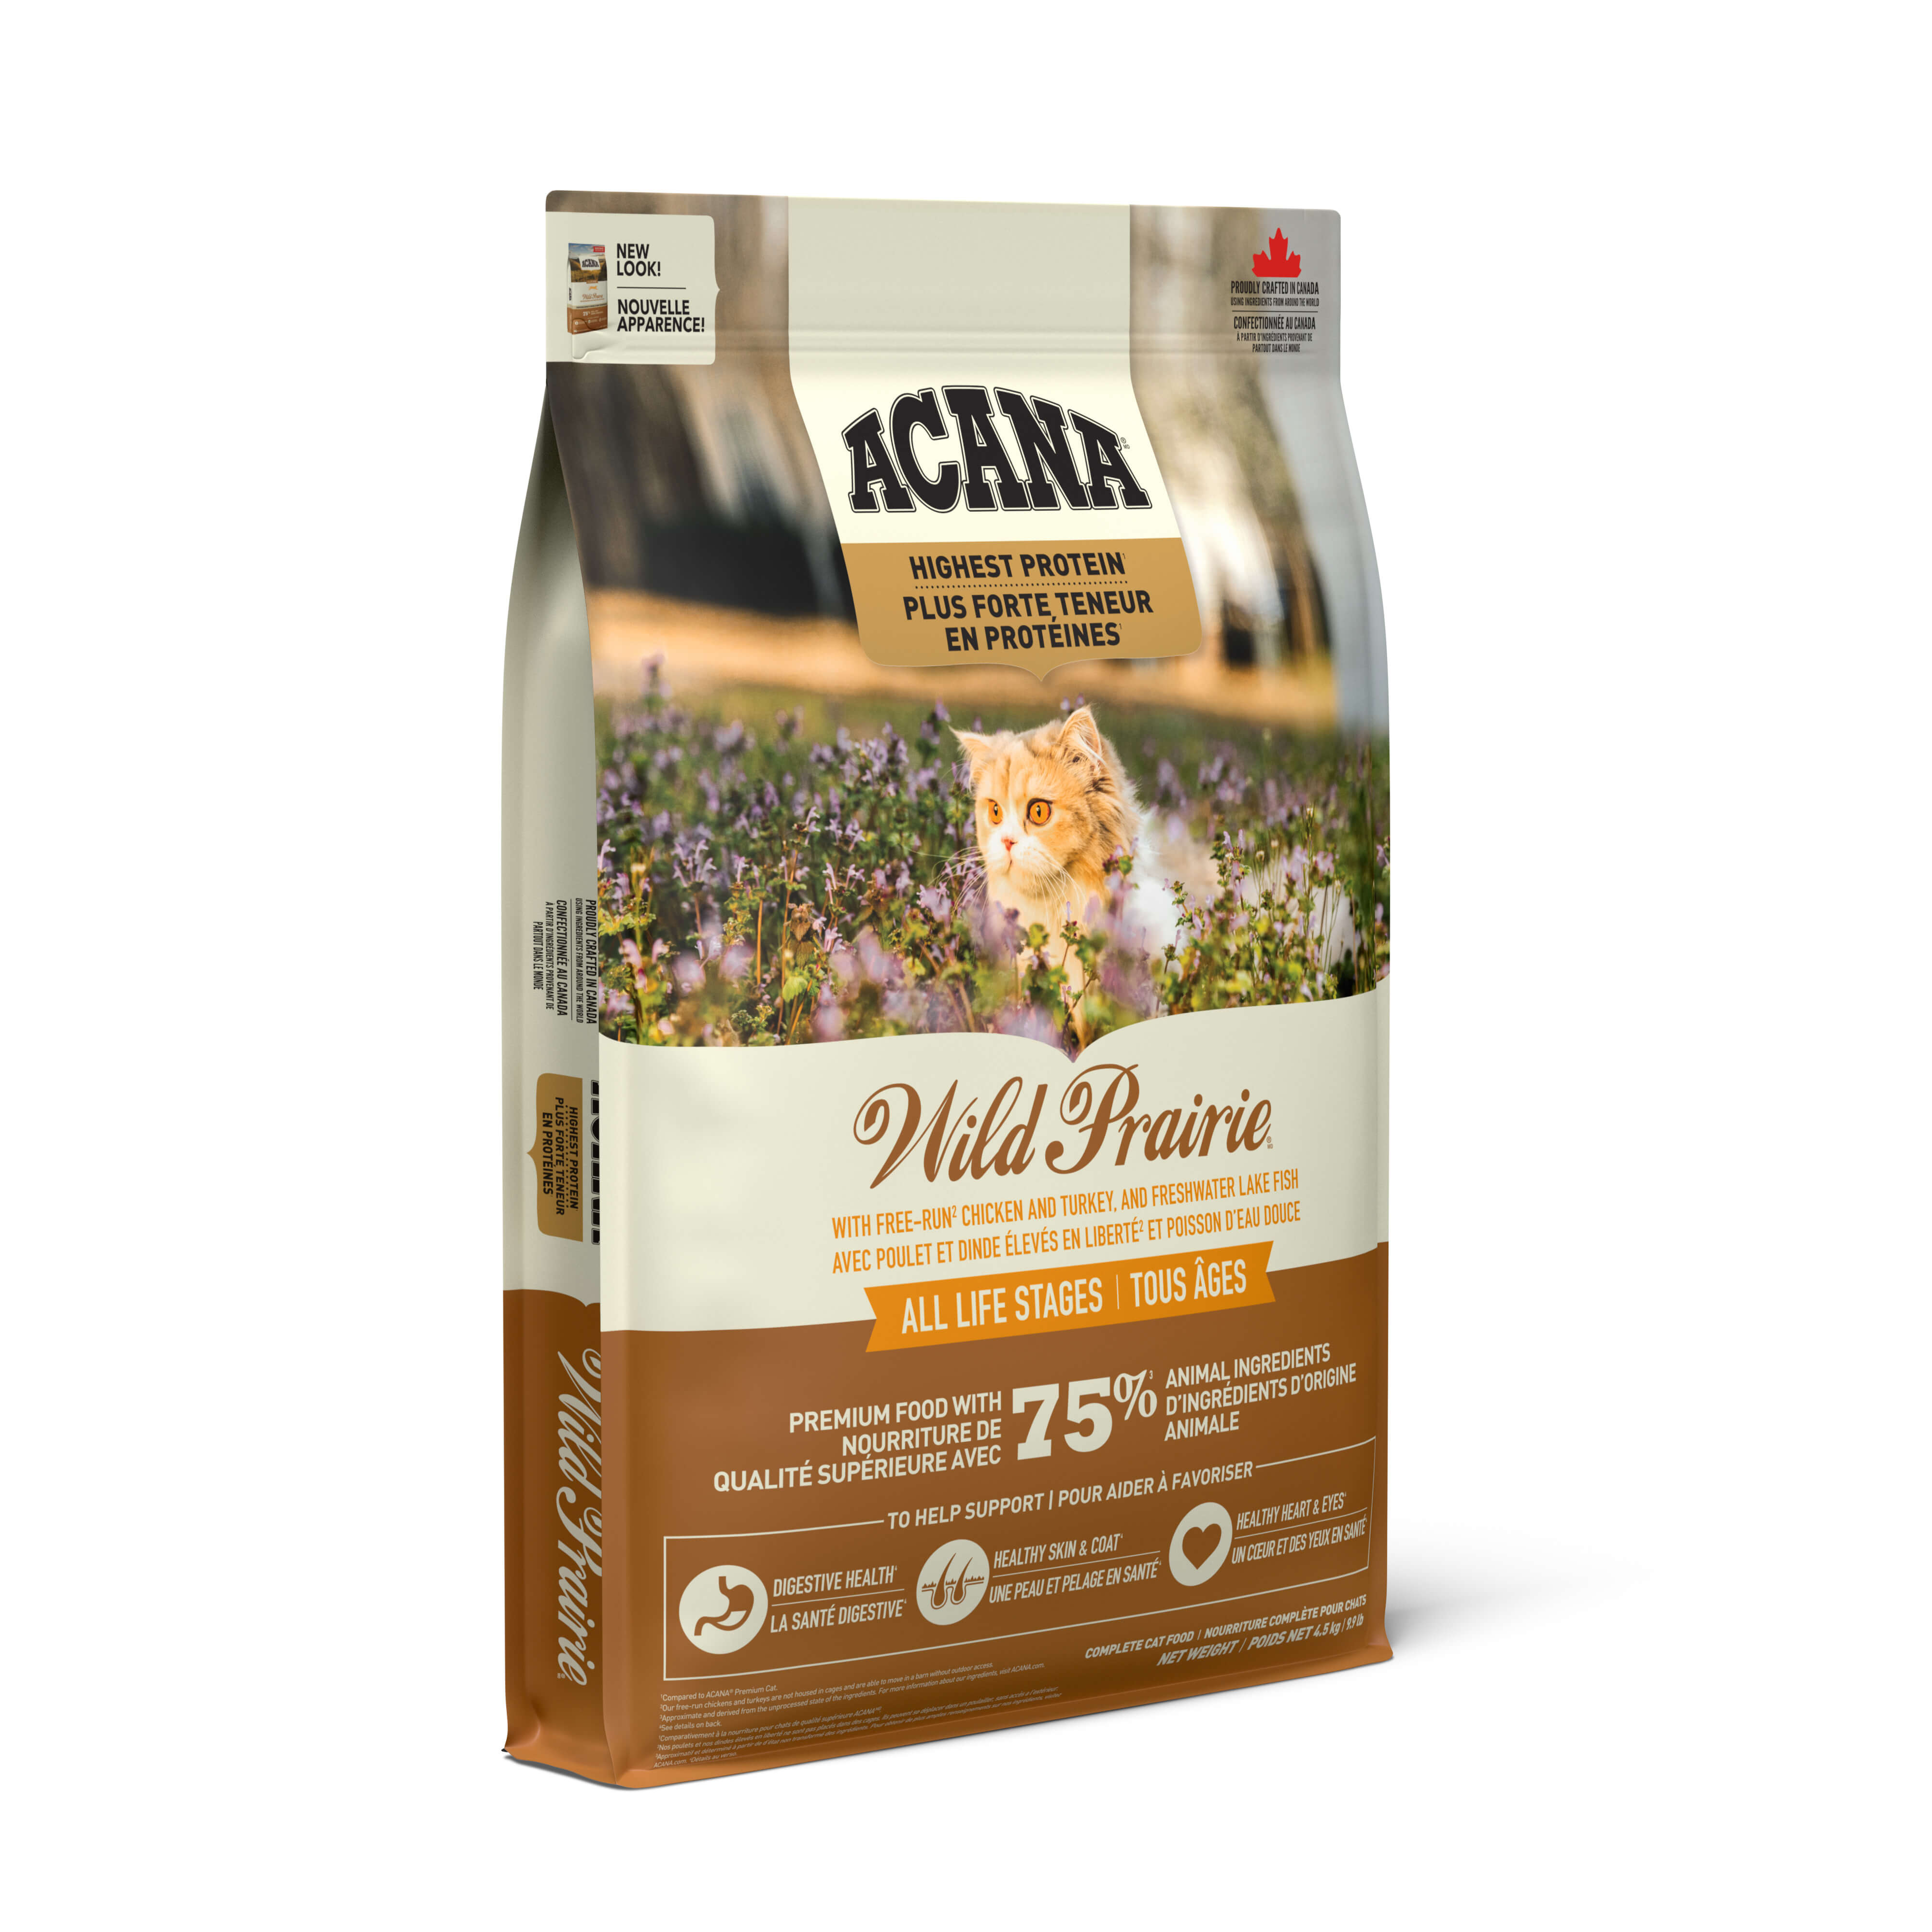 Acana - Highest Protein - Wild Prairie (Dry Cat Food)